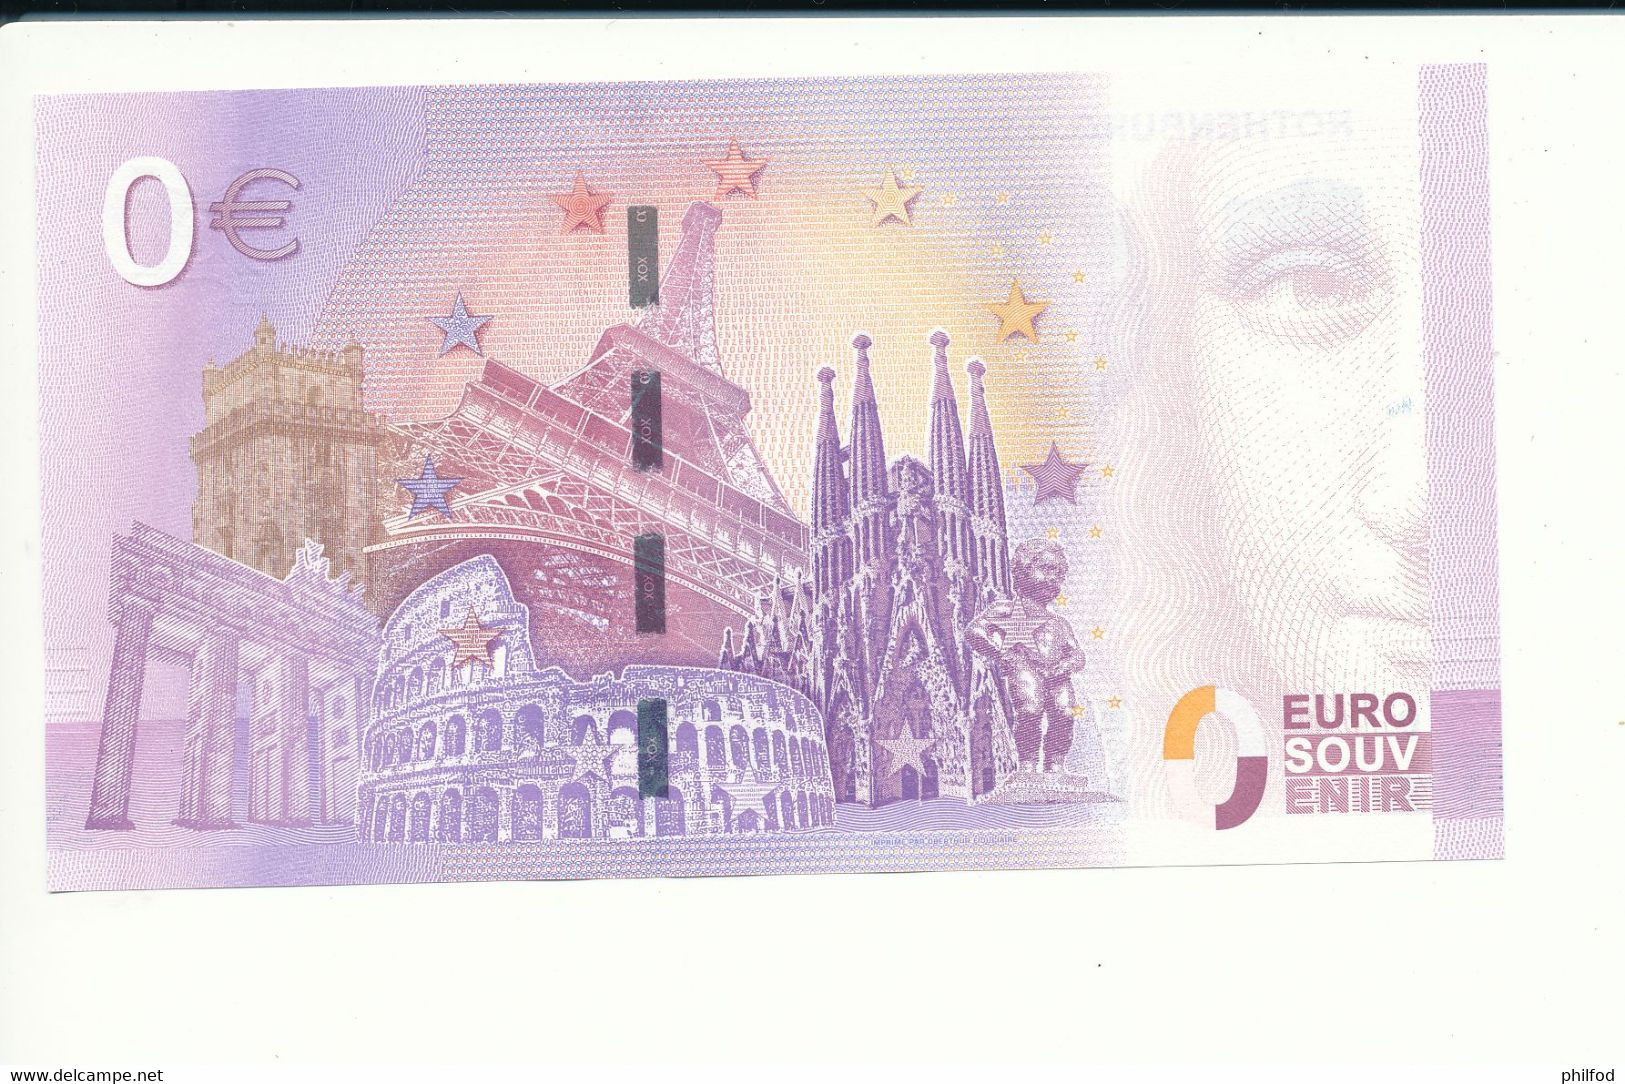 Billet Souvenir - 0 Euro - XEQE - 2017-1 - ROTHENBURG O.D. TAUBER - PLÖNLEIN - N° 2458 - Kiloware - Banknoten